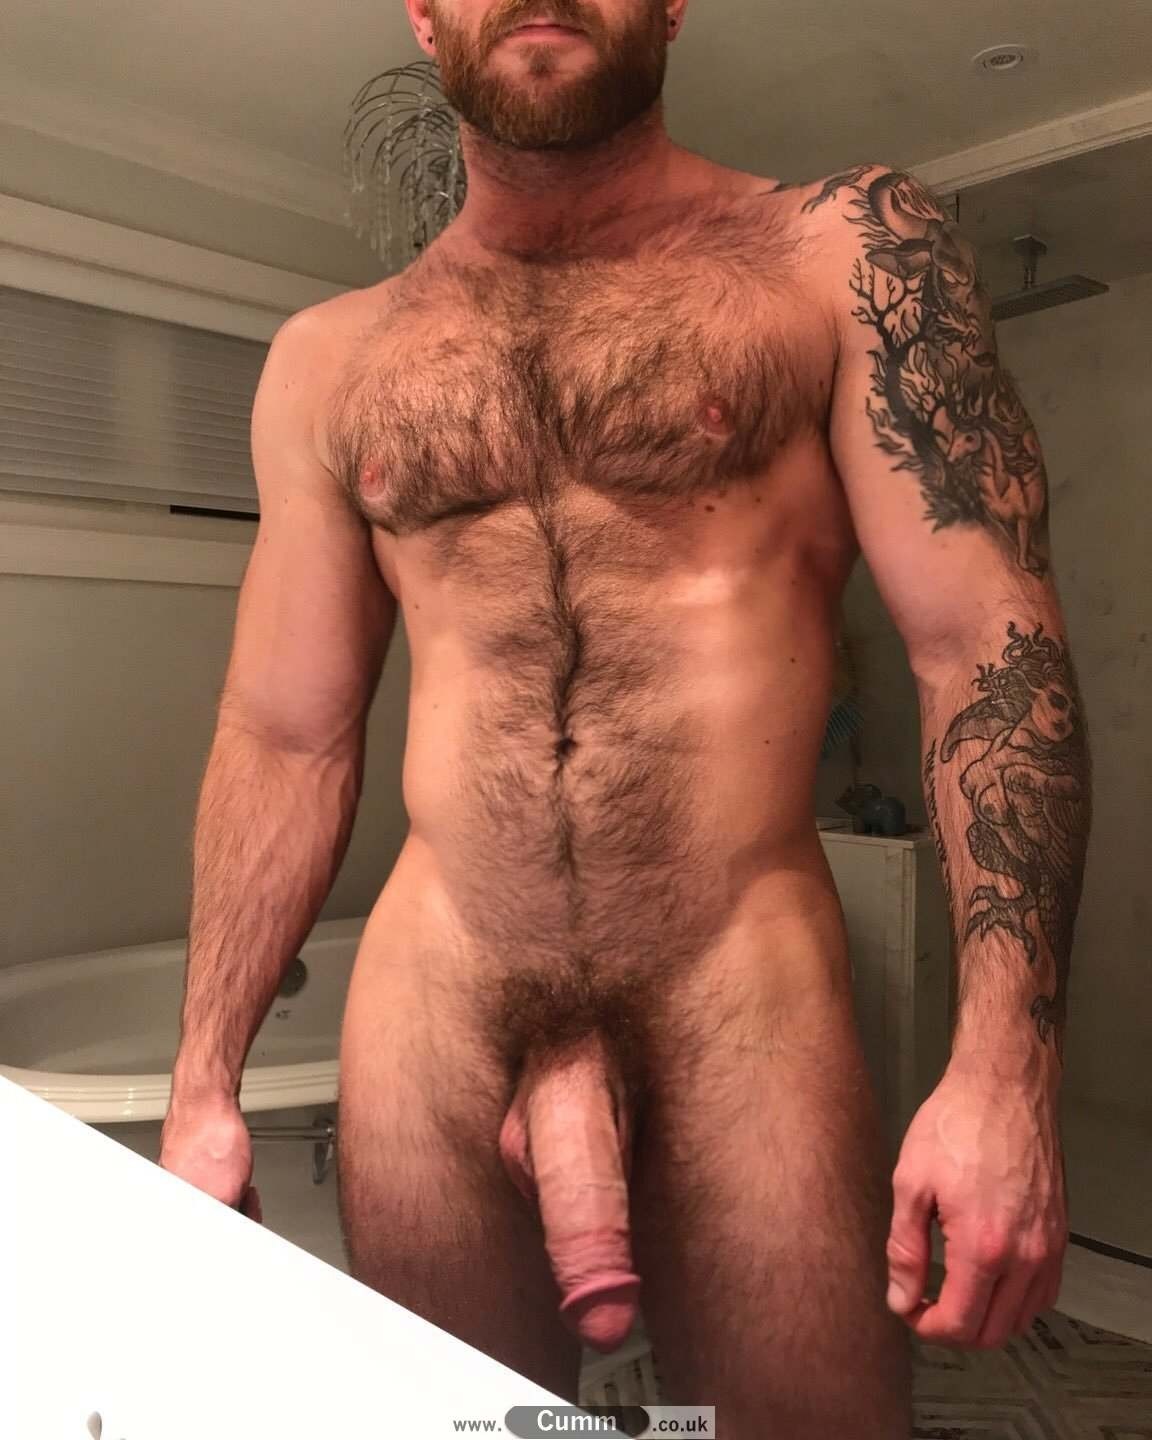 Big Dick Hair - Naked Guy Shows His Hairy Penis (46 photos) - motherless porn pics